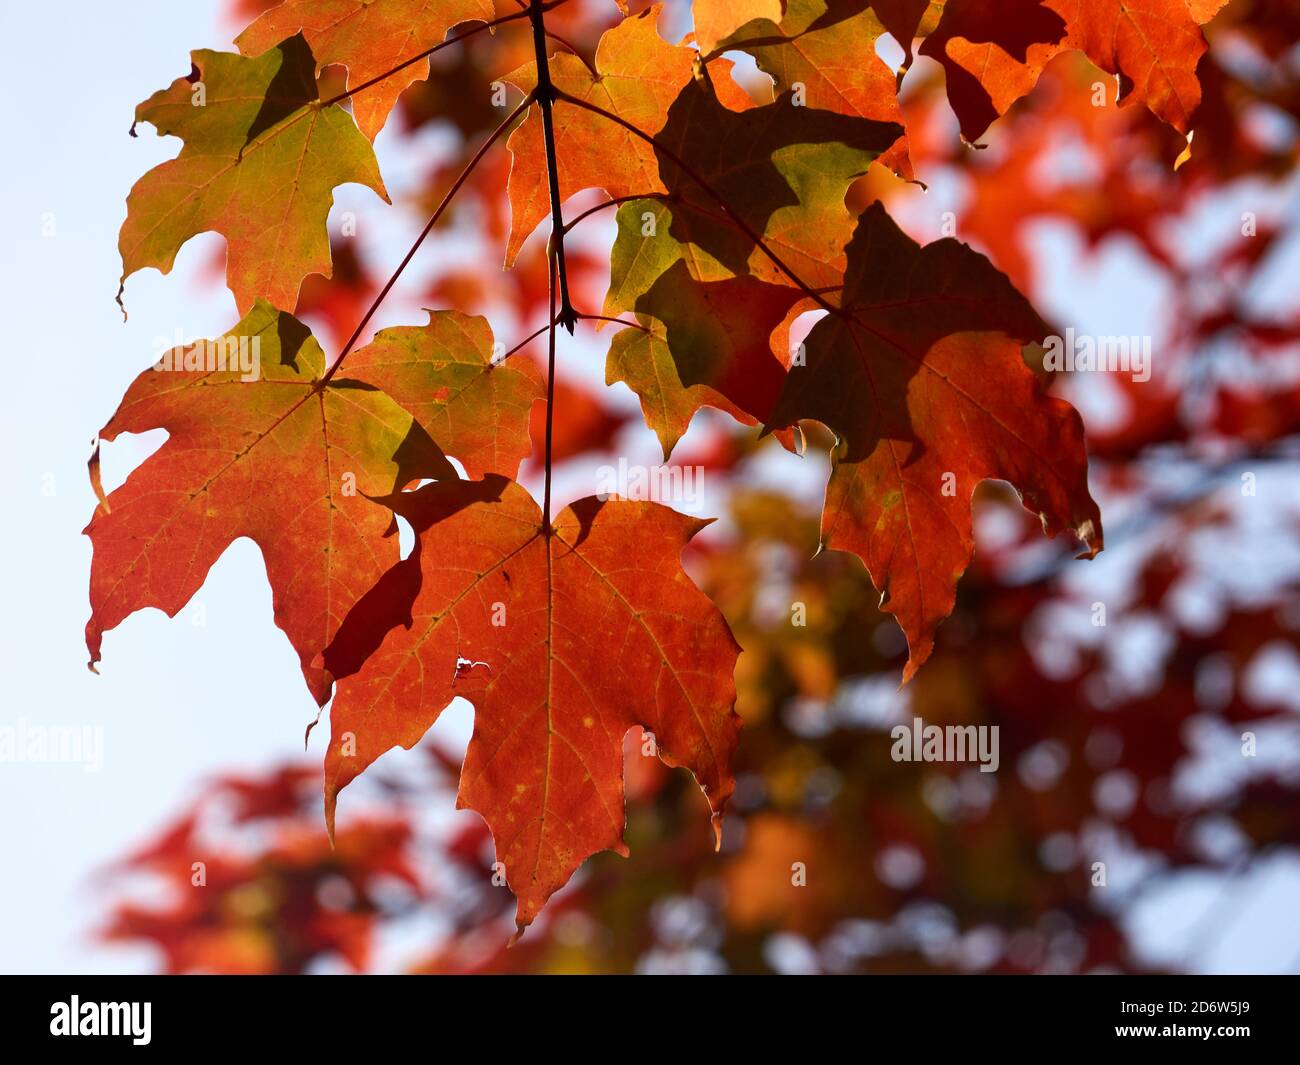 Primer plano de hojas de arce rojo naranja retroiluminadas en el otoño Foto de stock